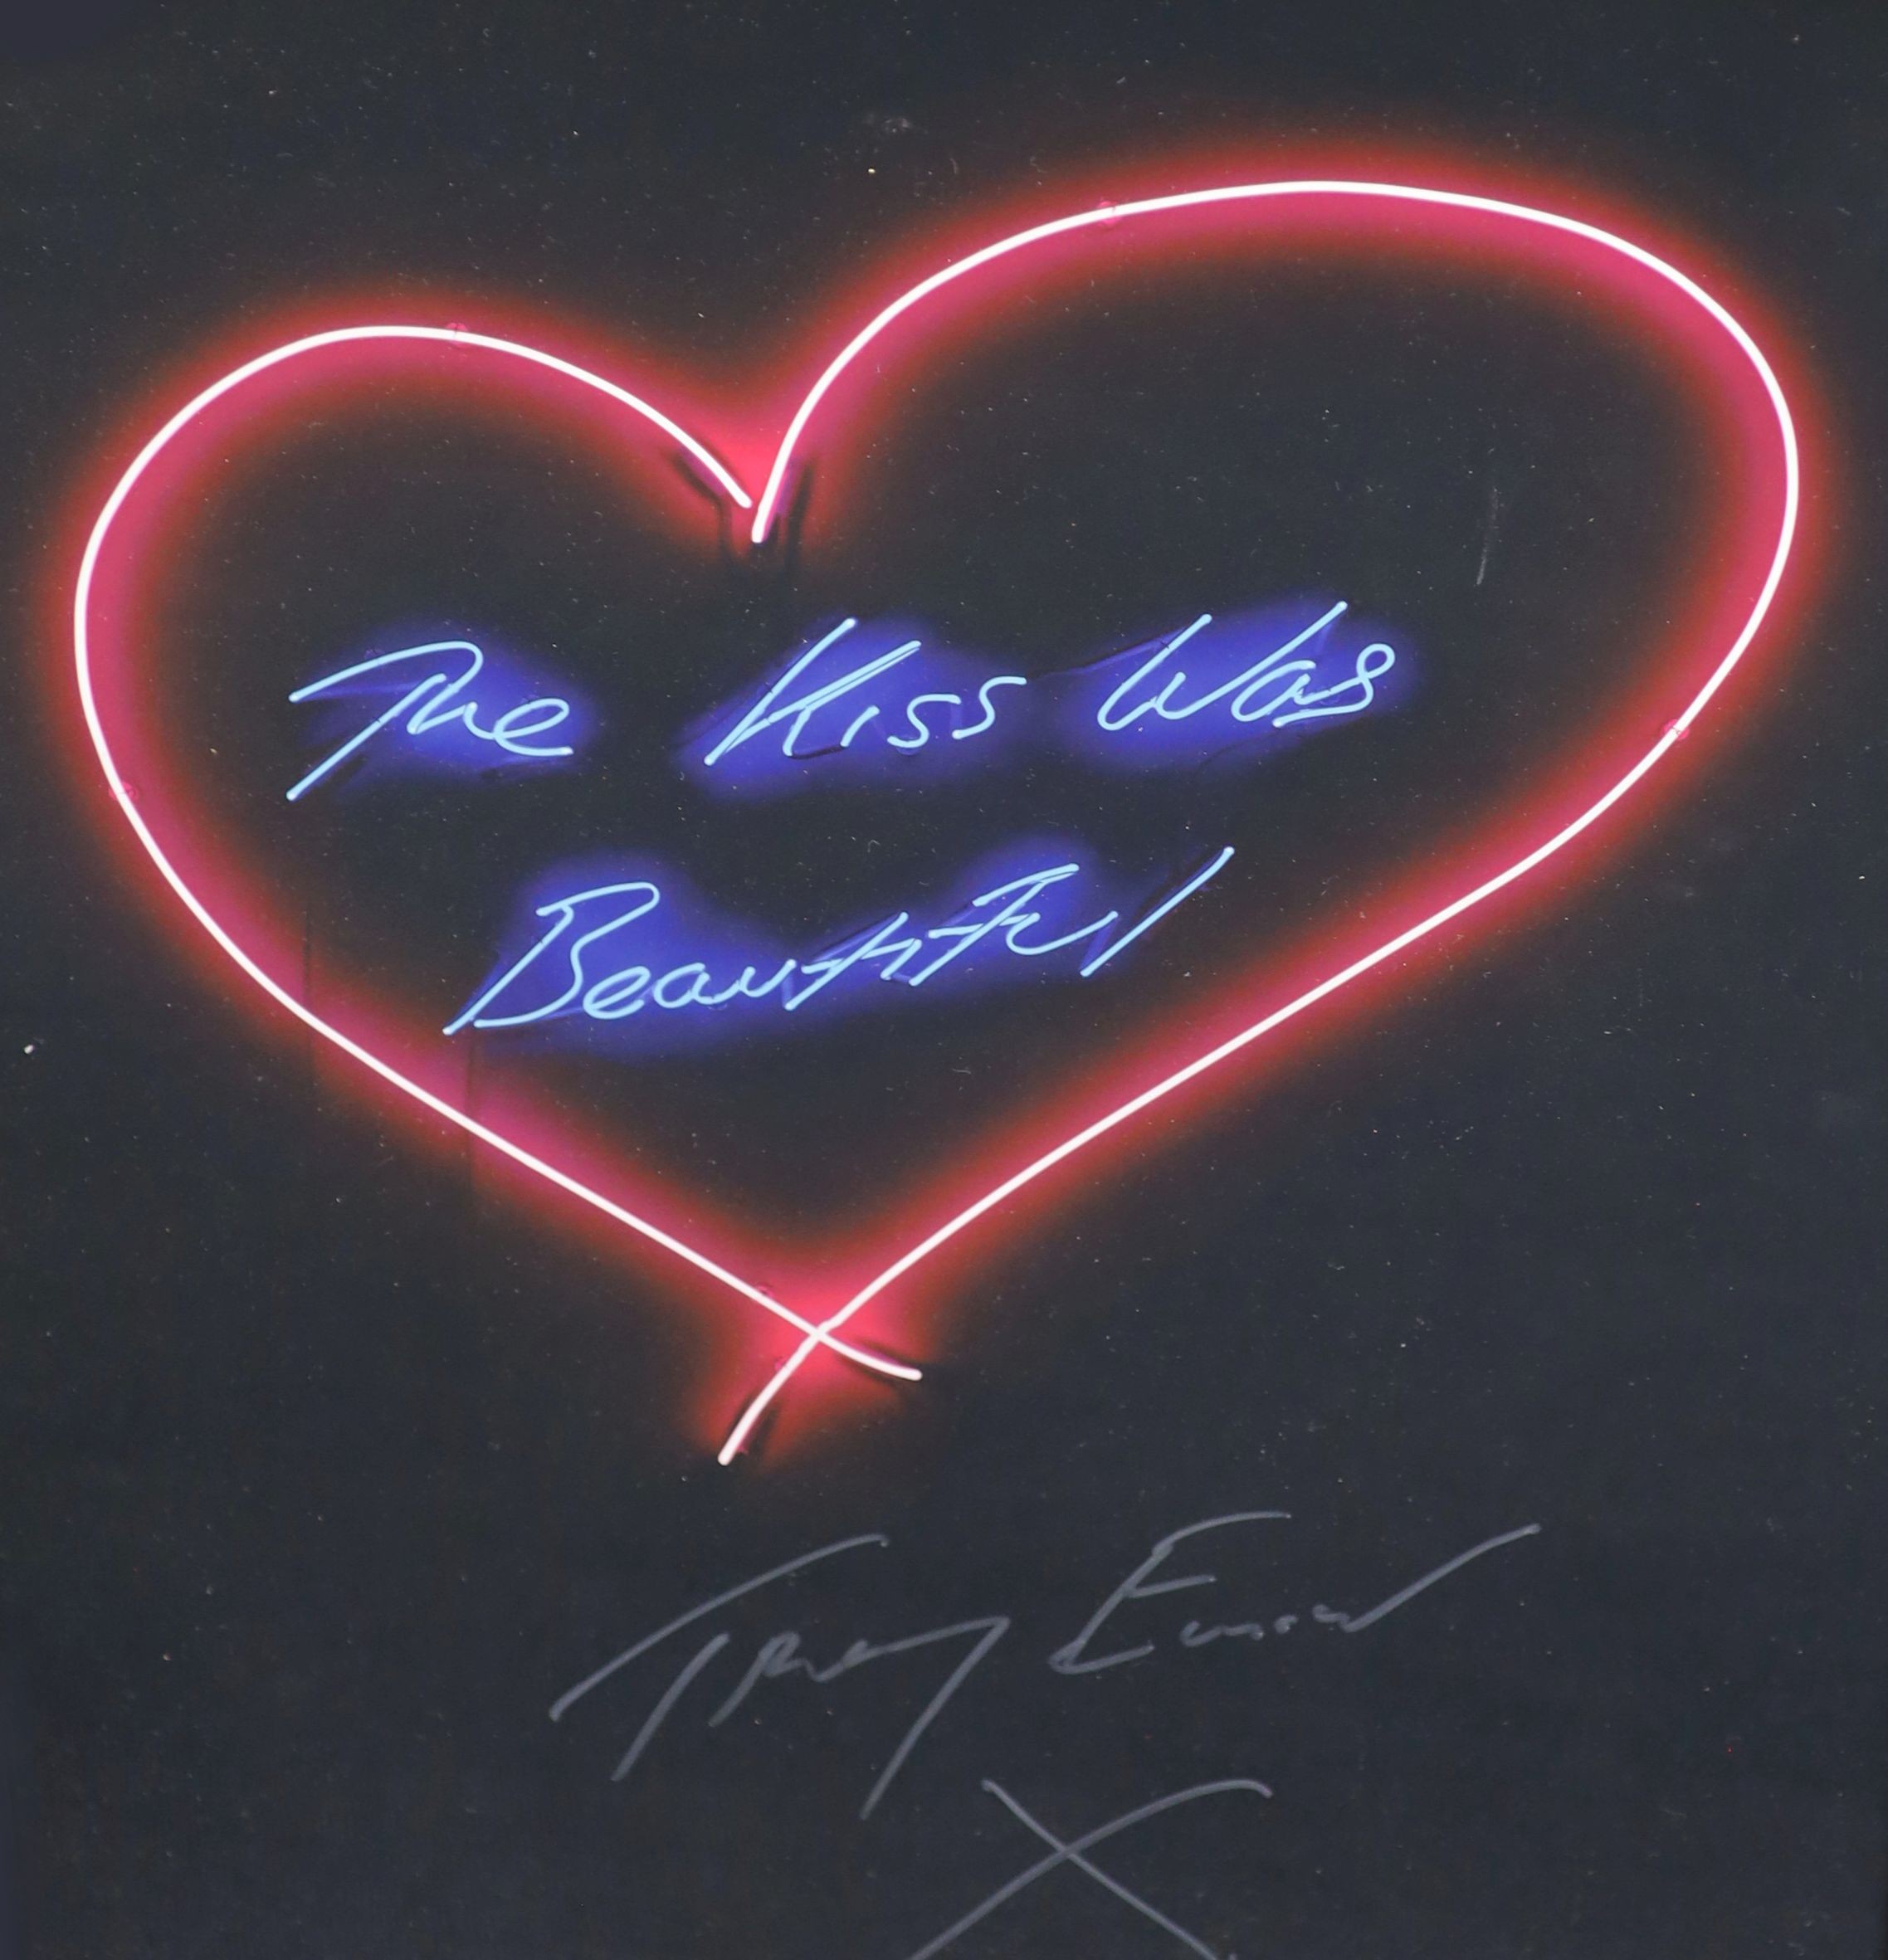 Tracey Emin (1963-), The Kiss Was Beautiful, 2013, Colour print, 69 x 49cm.